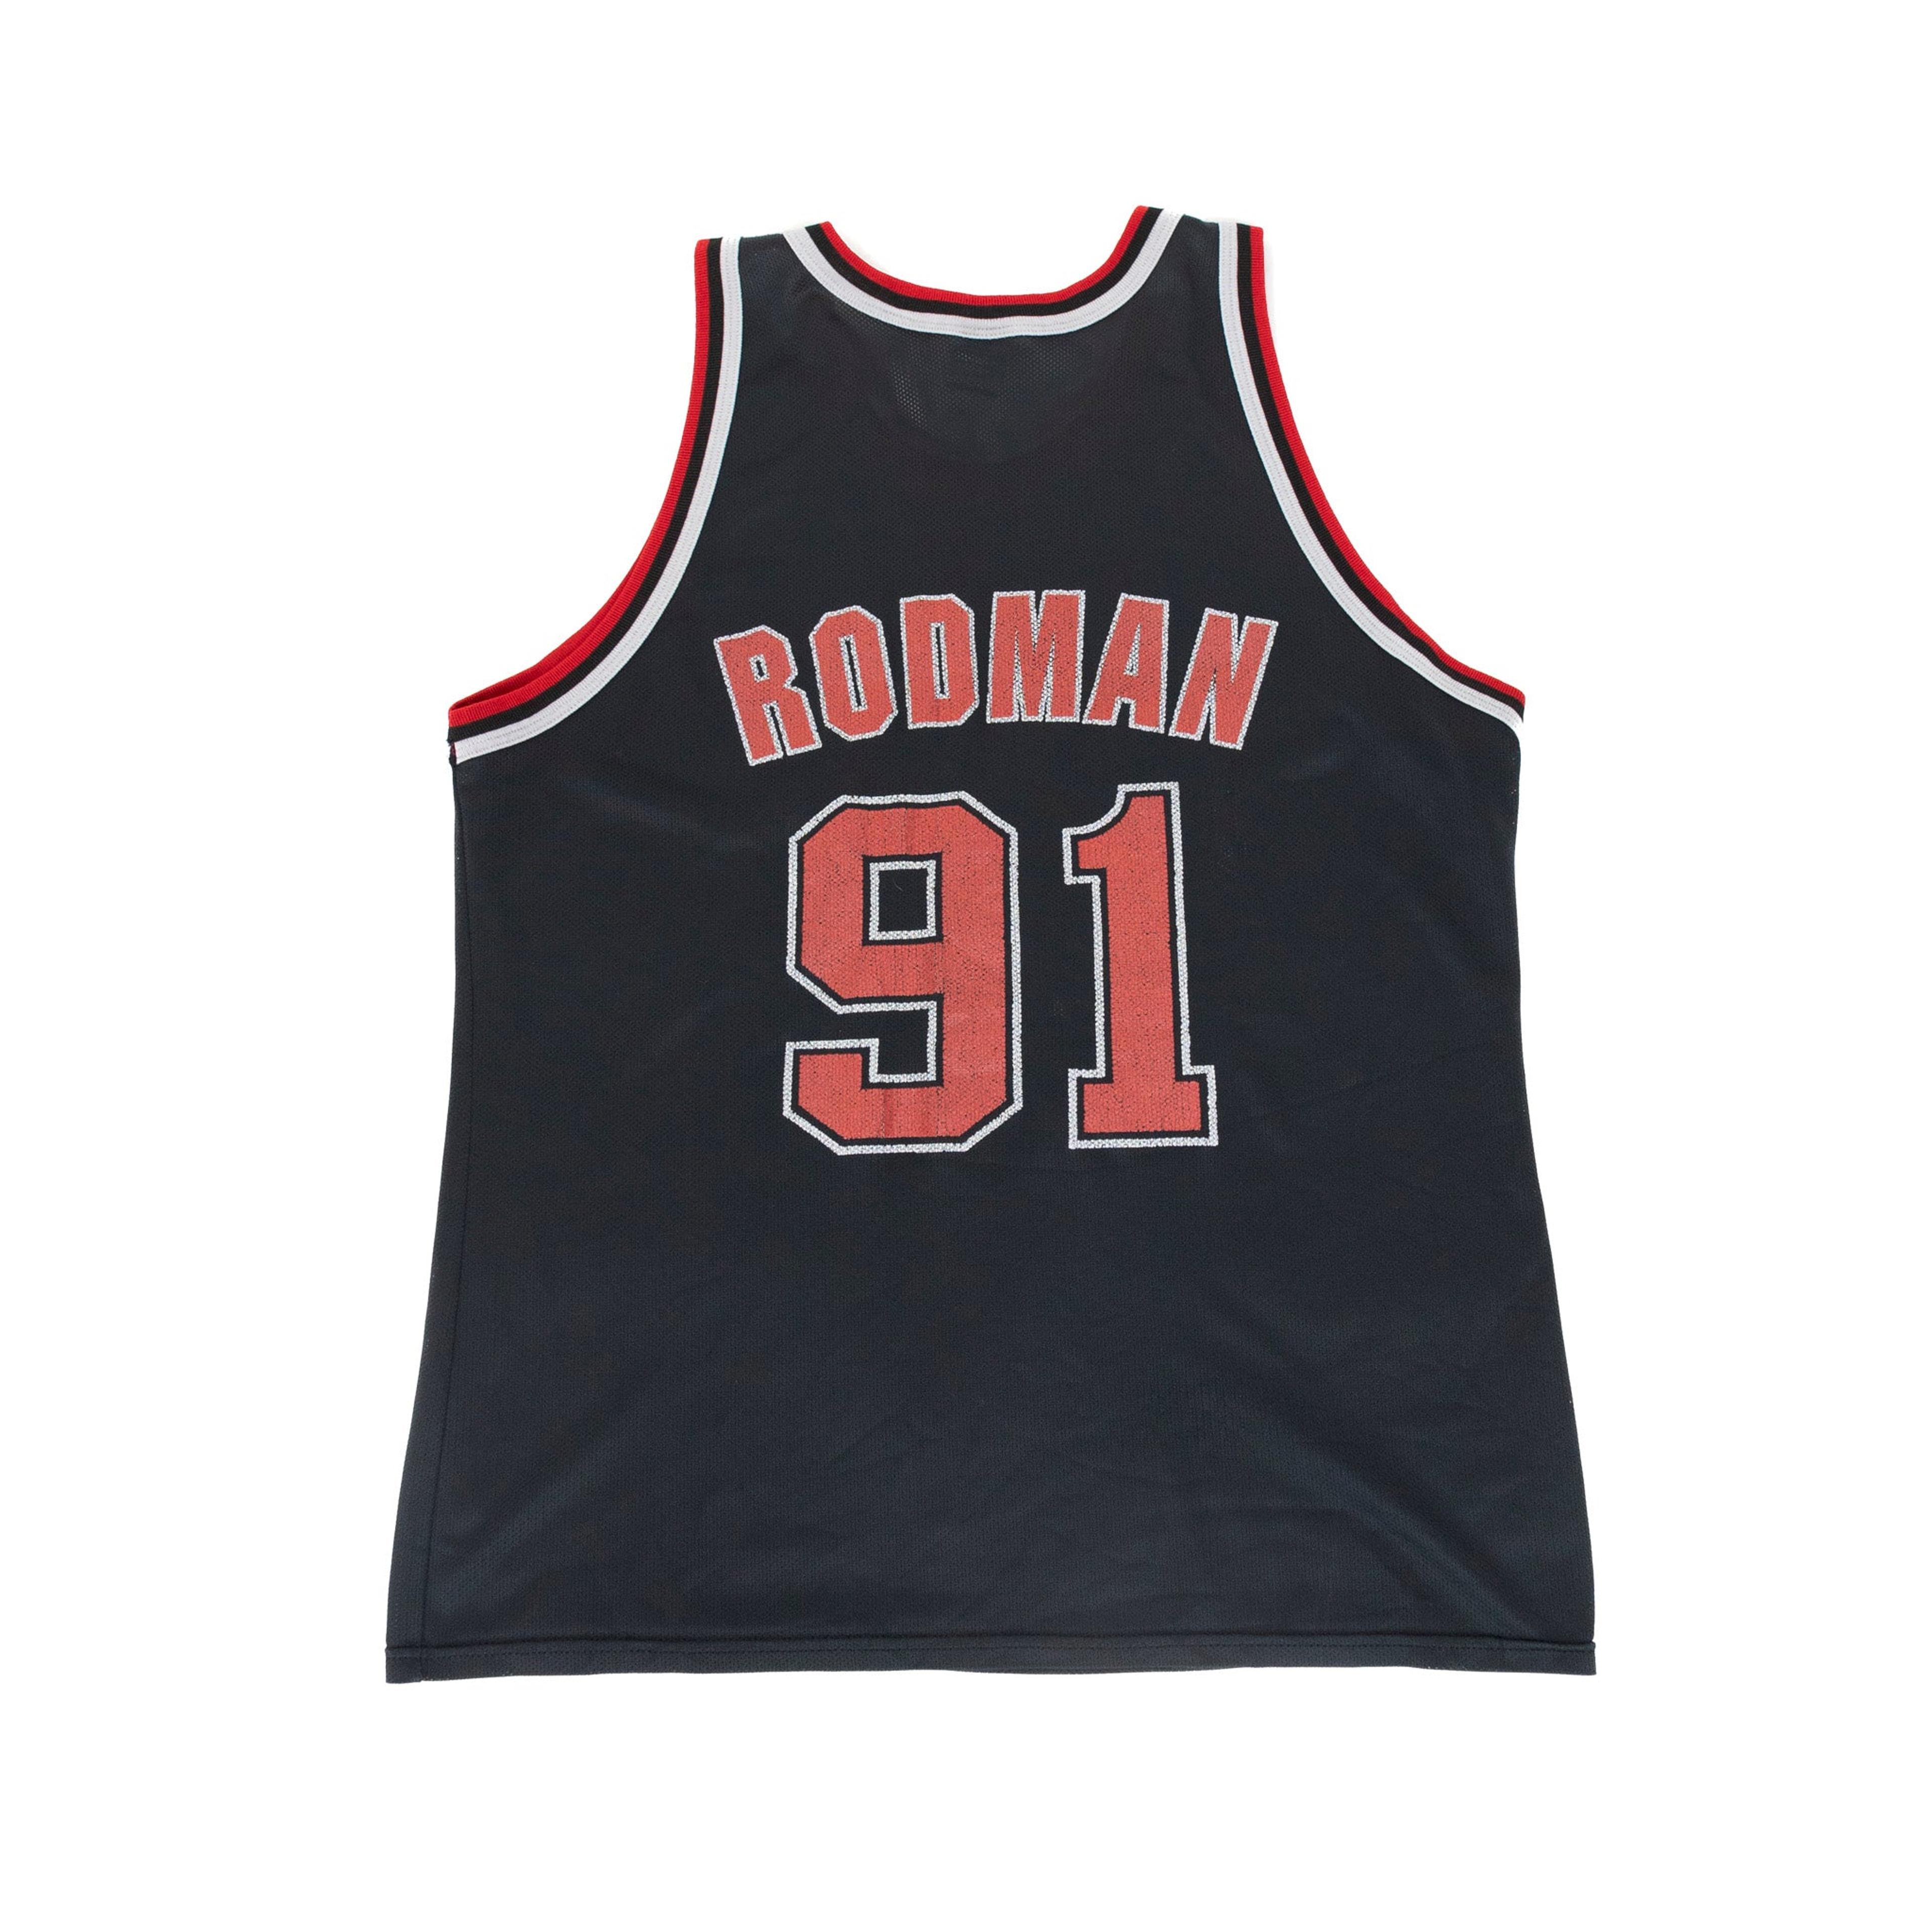 Alternate View 2 of Chicago Bulls x Champion NBA Rodman Vest